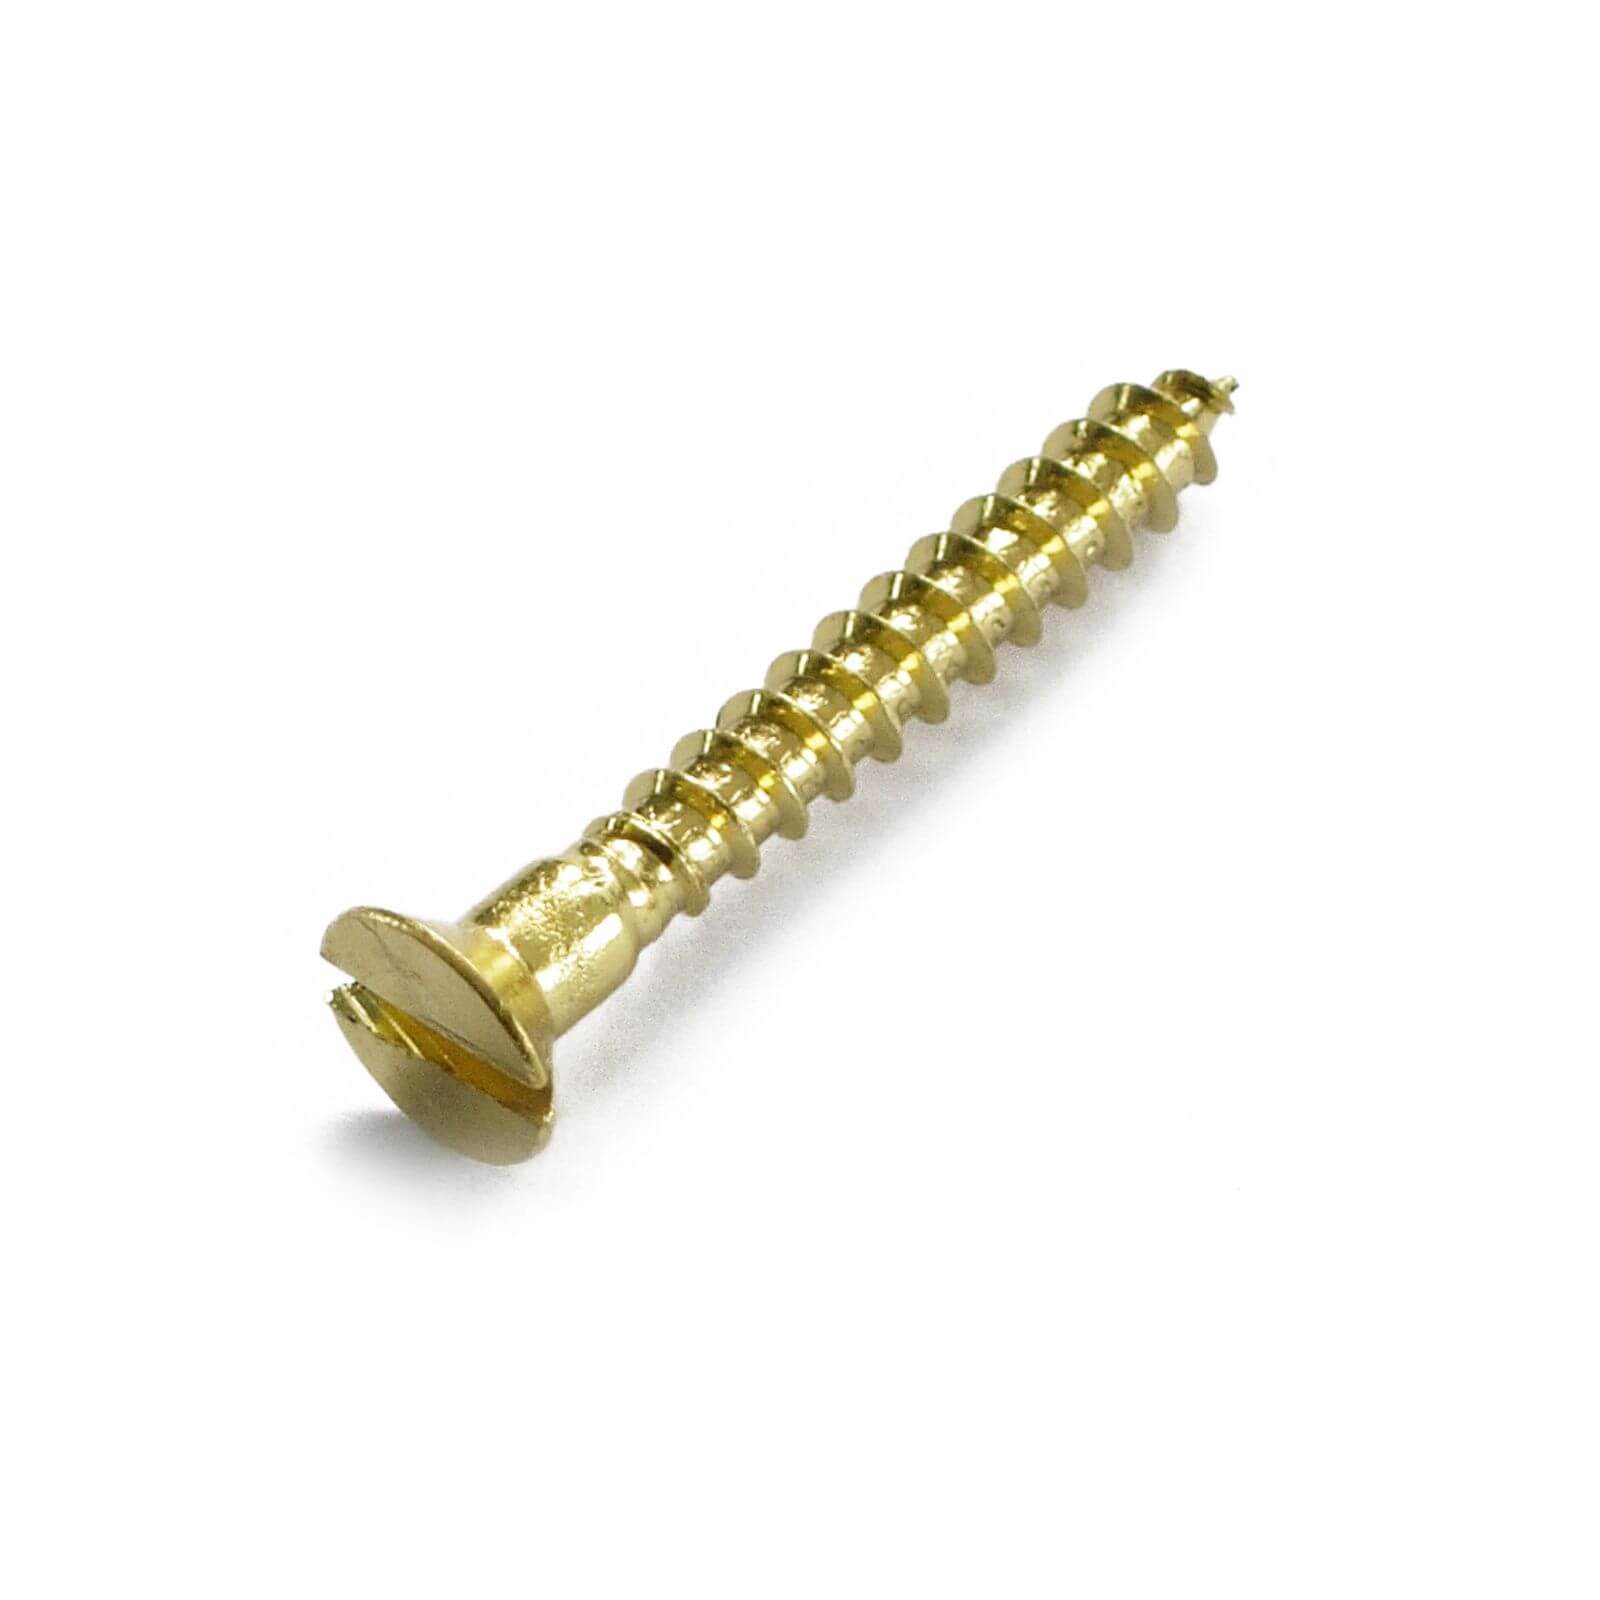 Wood Screw - Countersunk - Brass - 3.5 x 40mm - 10 Pack